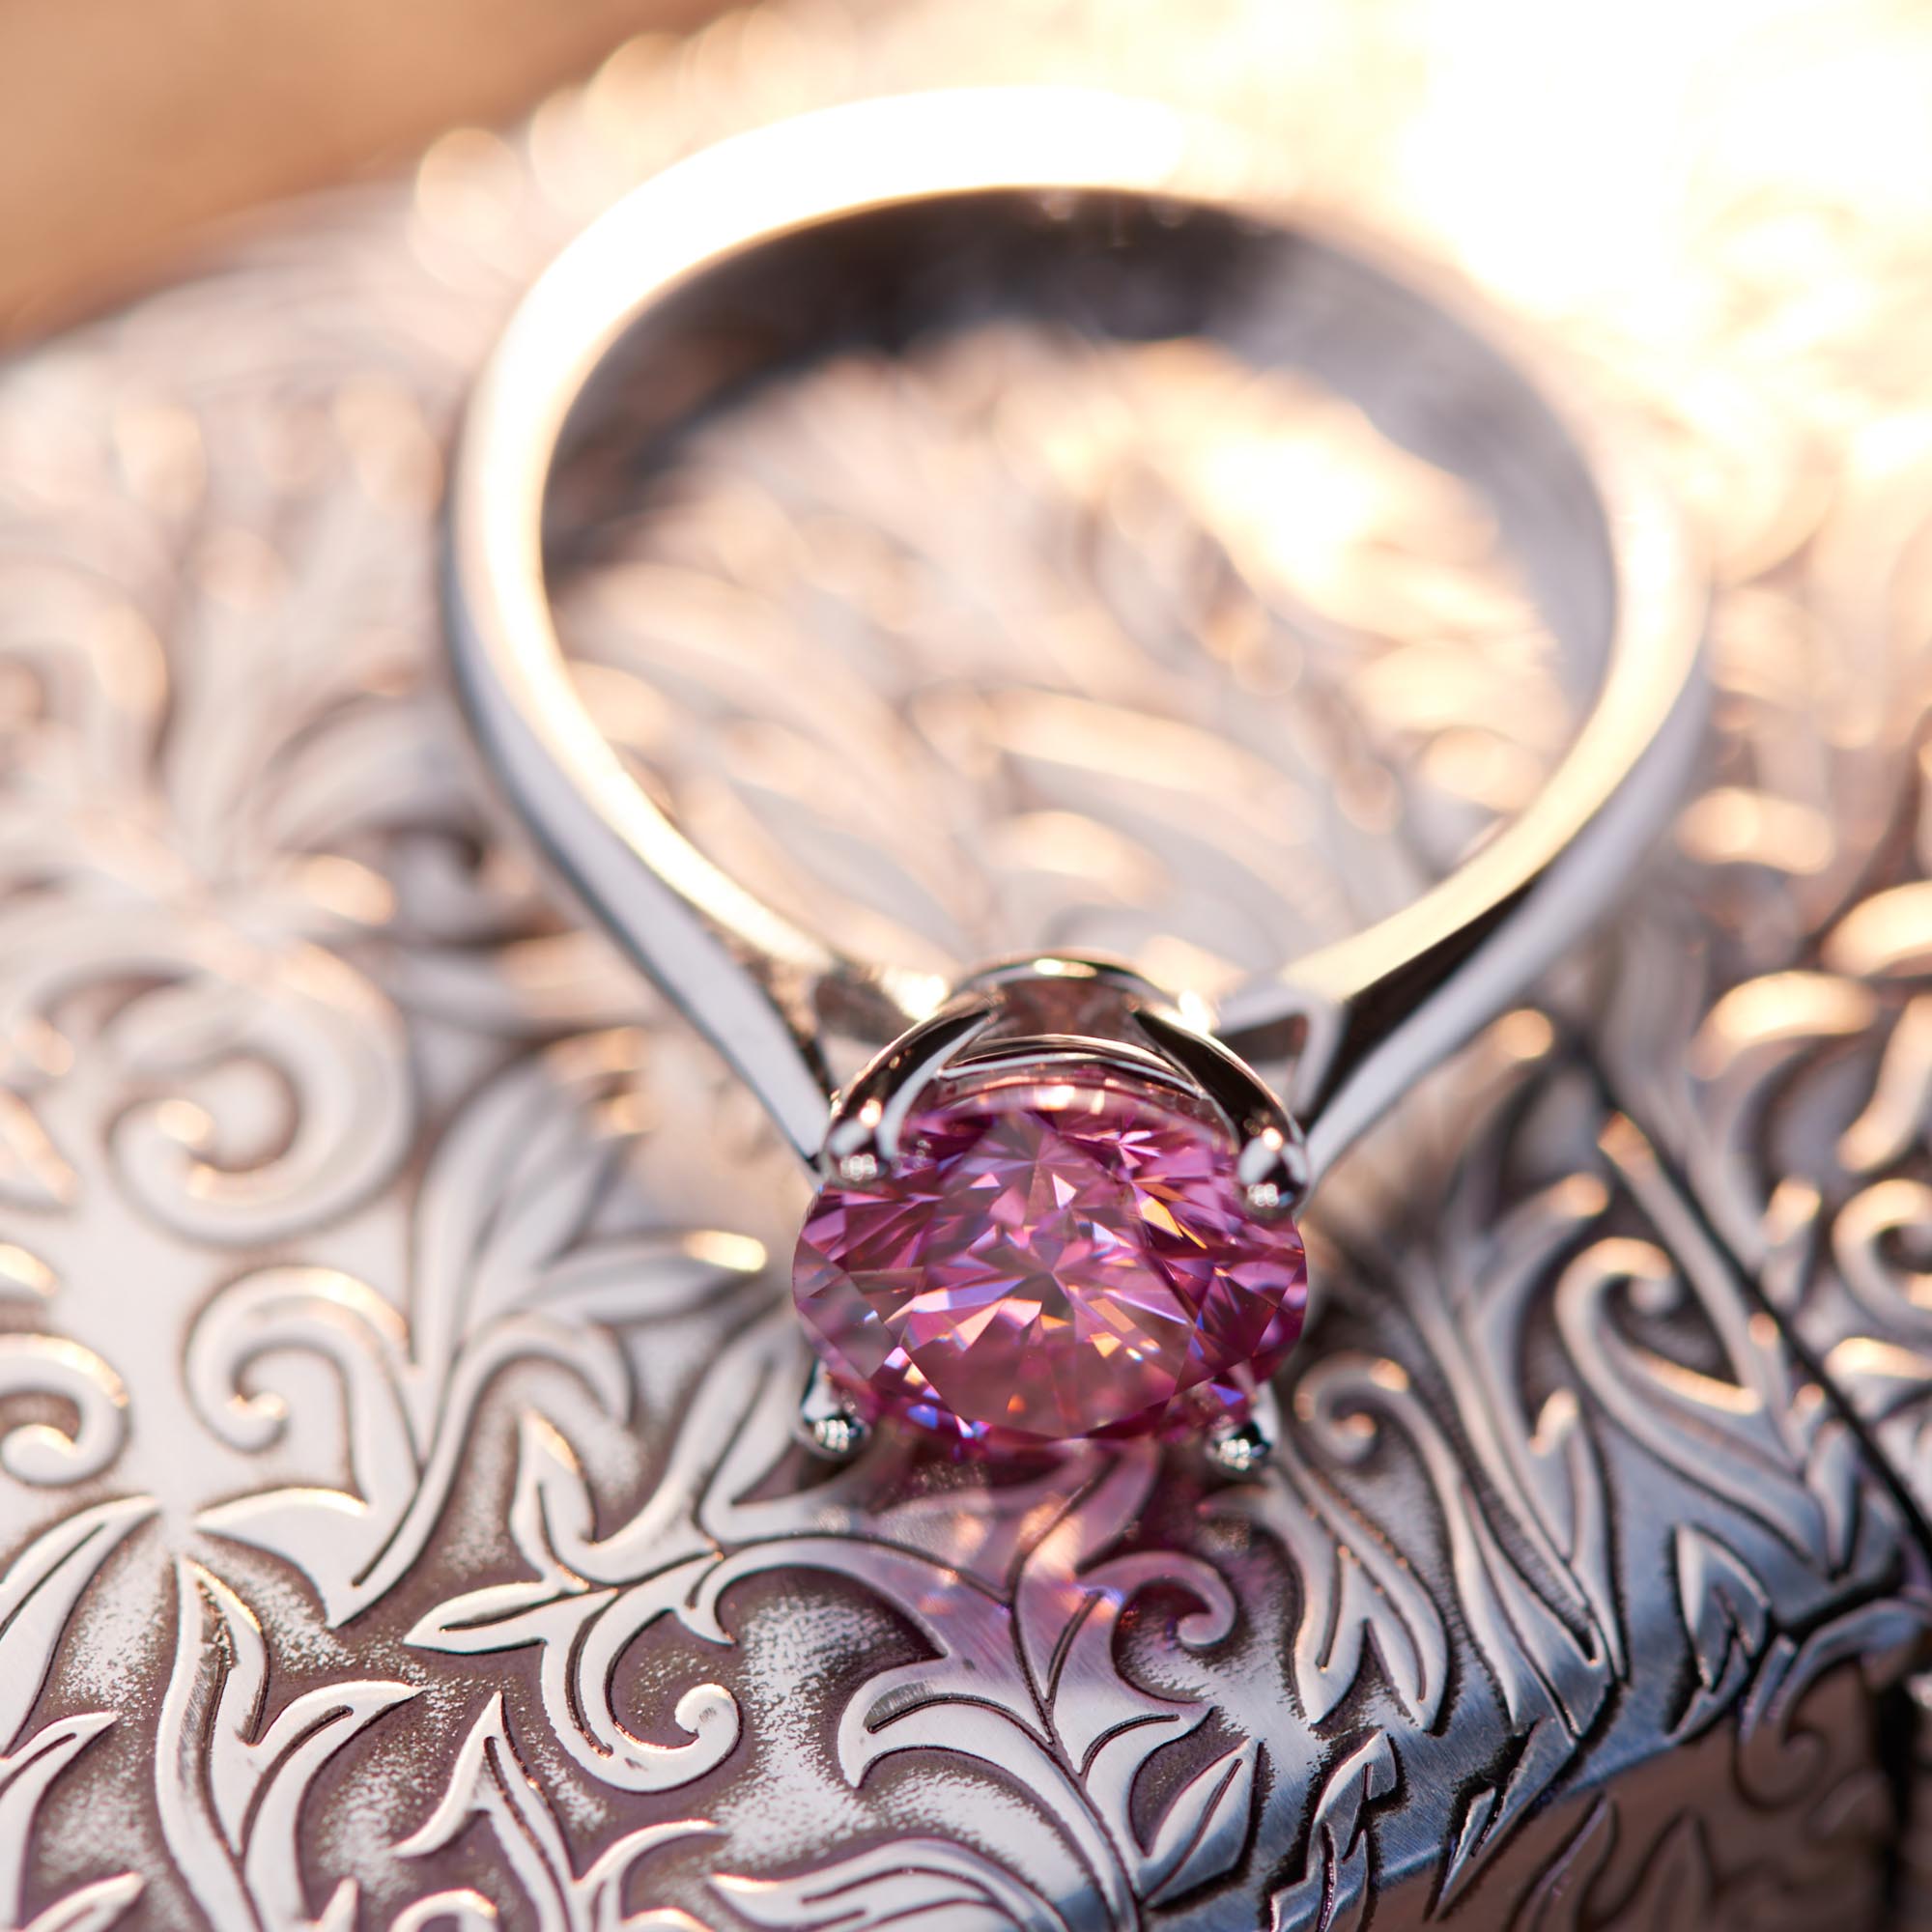 GIGAJEWE Moissanite 2.0ct 8.0mm Pink Colorful VVS1 Round Cut 925 Silver Ring Diamond Test Passed Fashion Woman Girl Gift